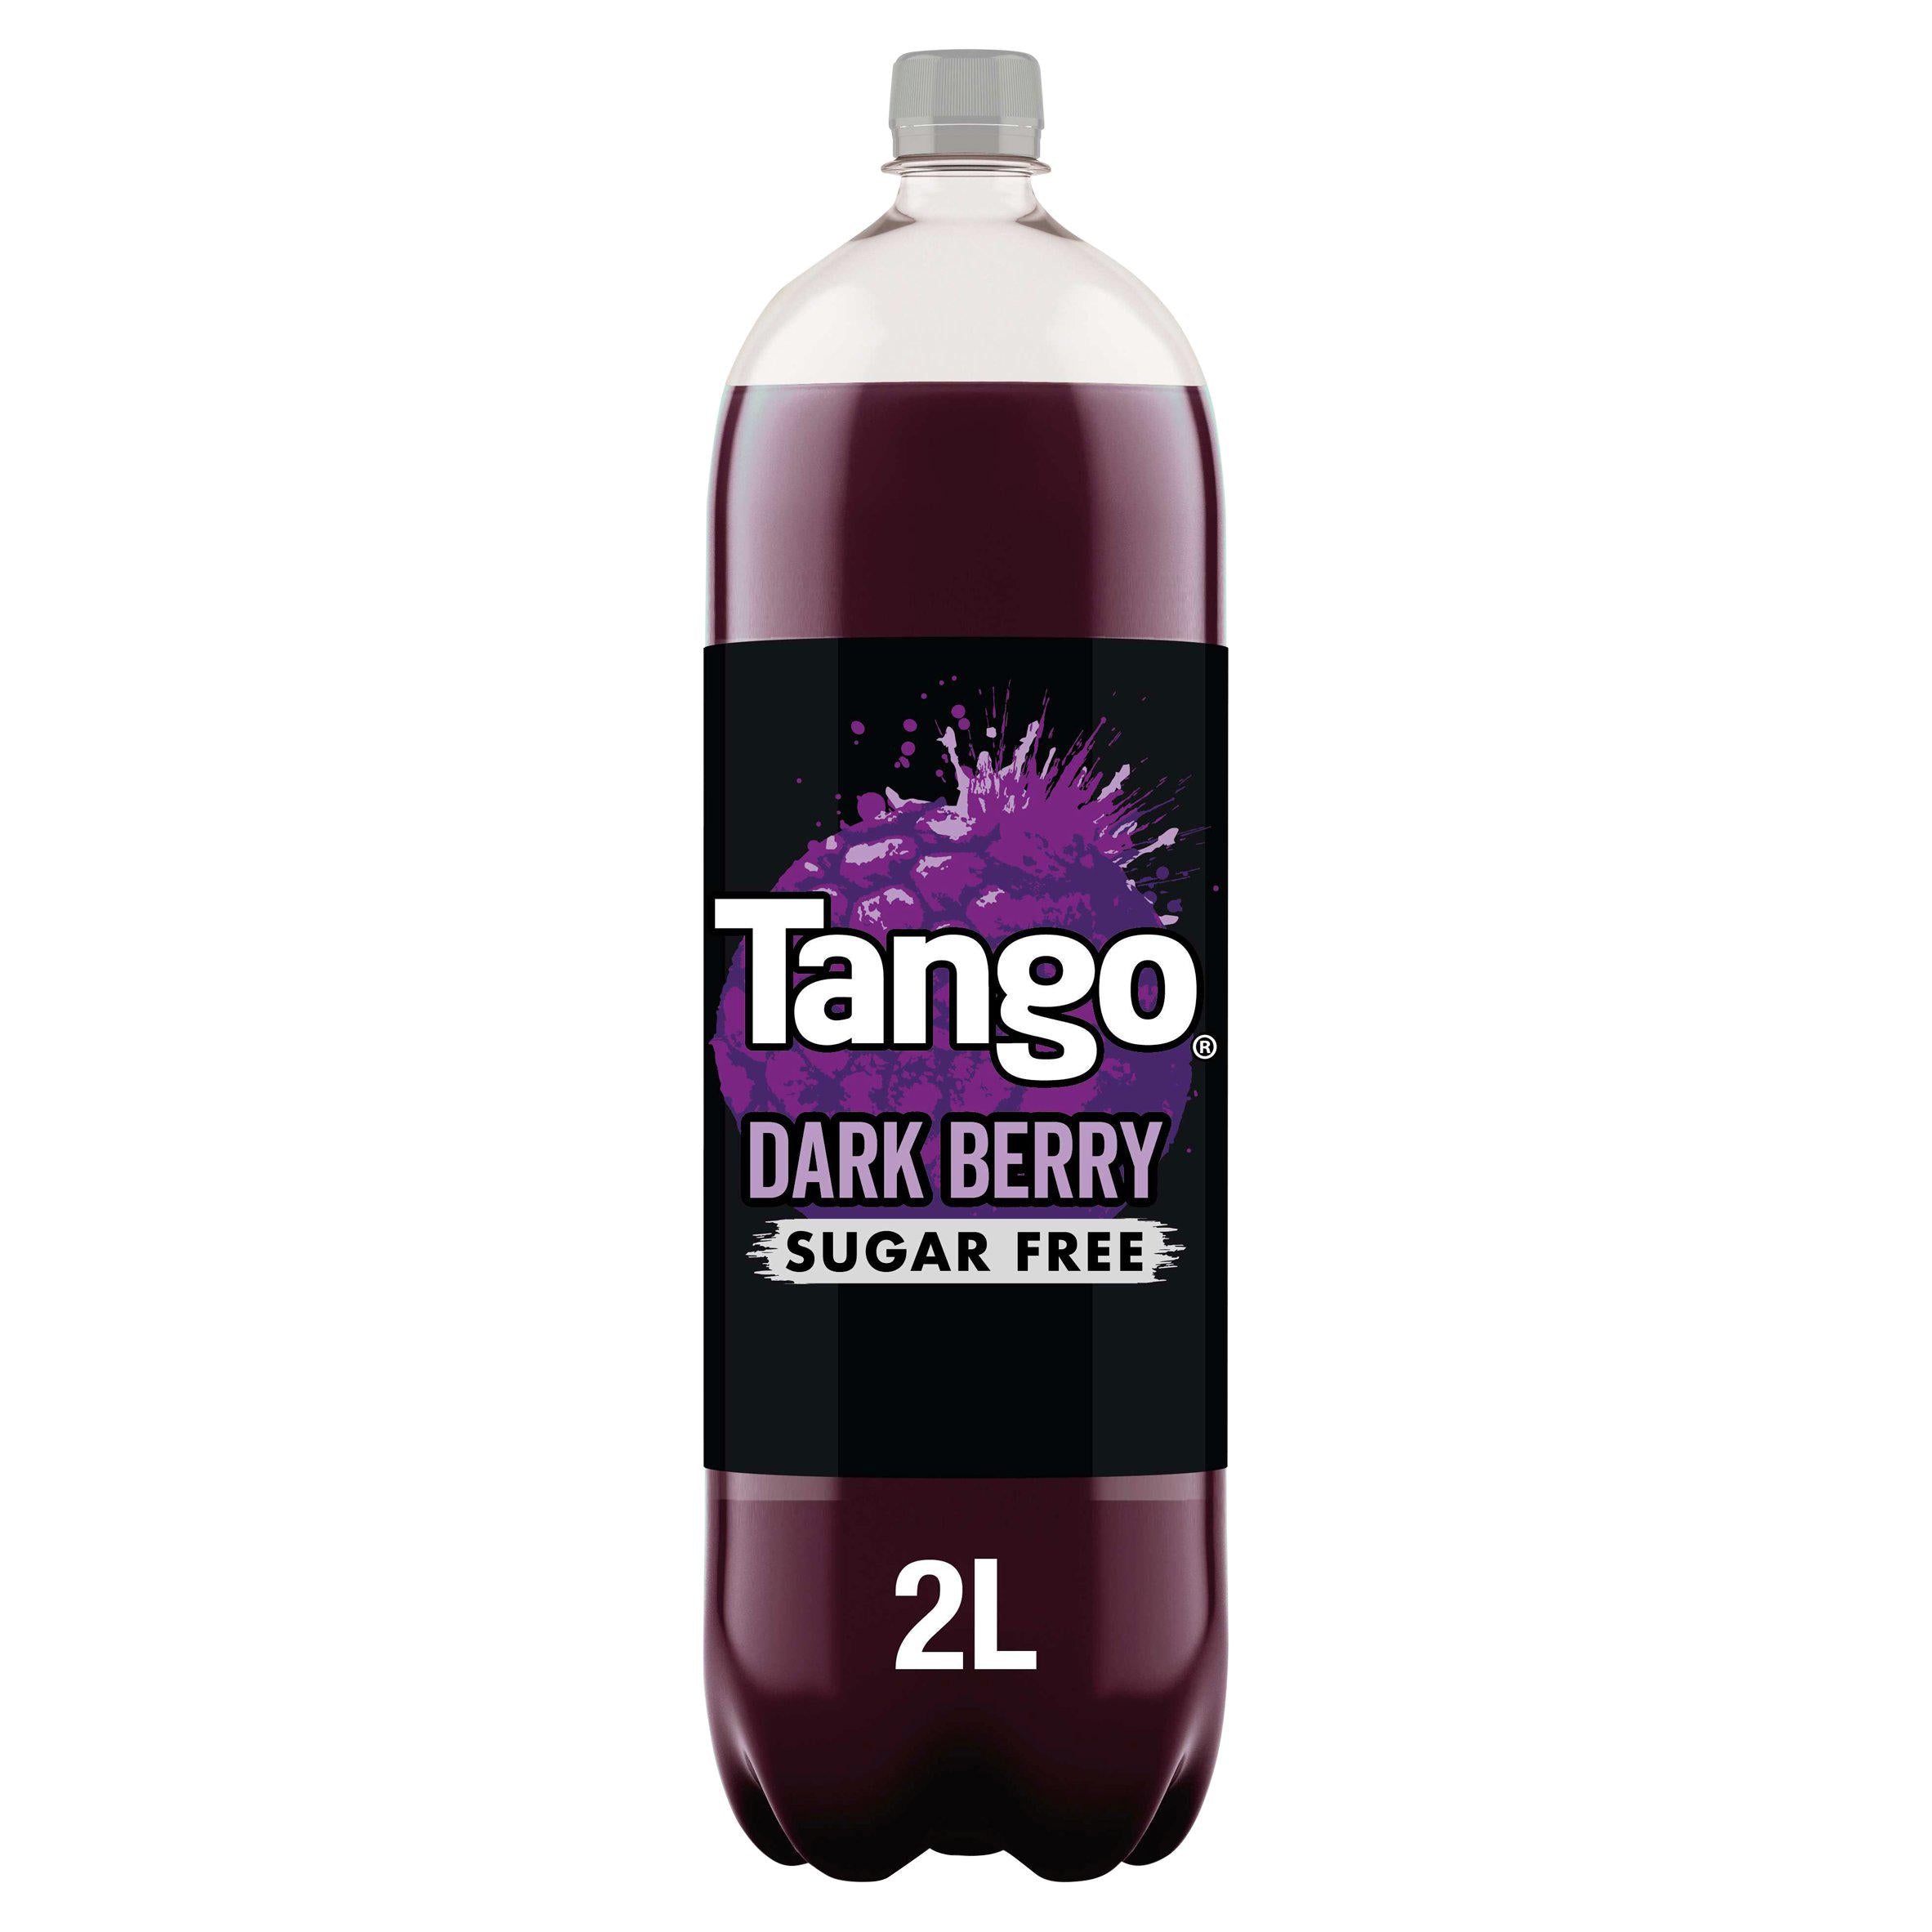 Tango Dark Berry Sugar Free 2L Adult soft drinks Sainsburys   